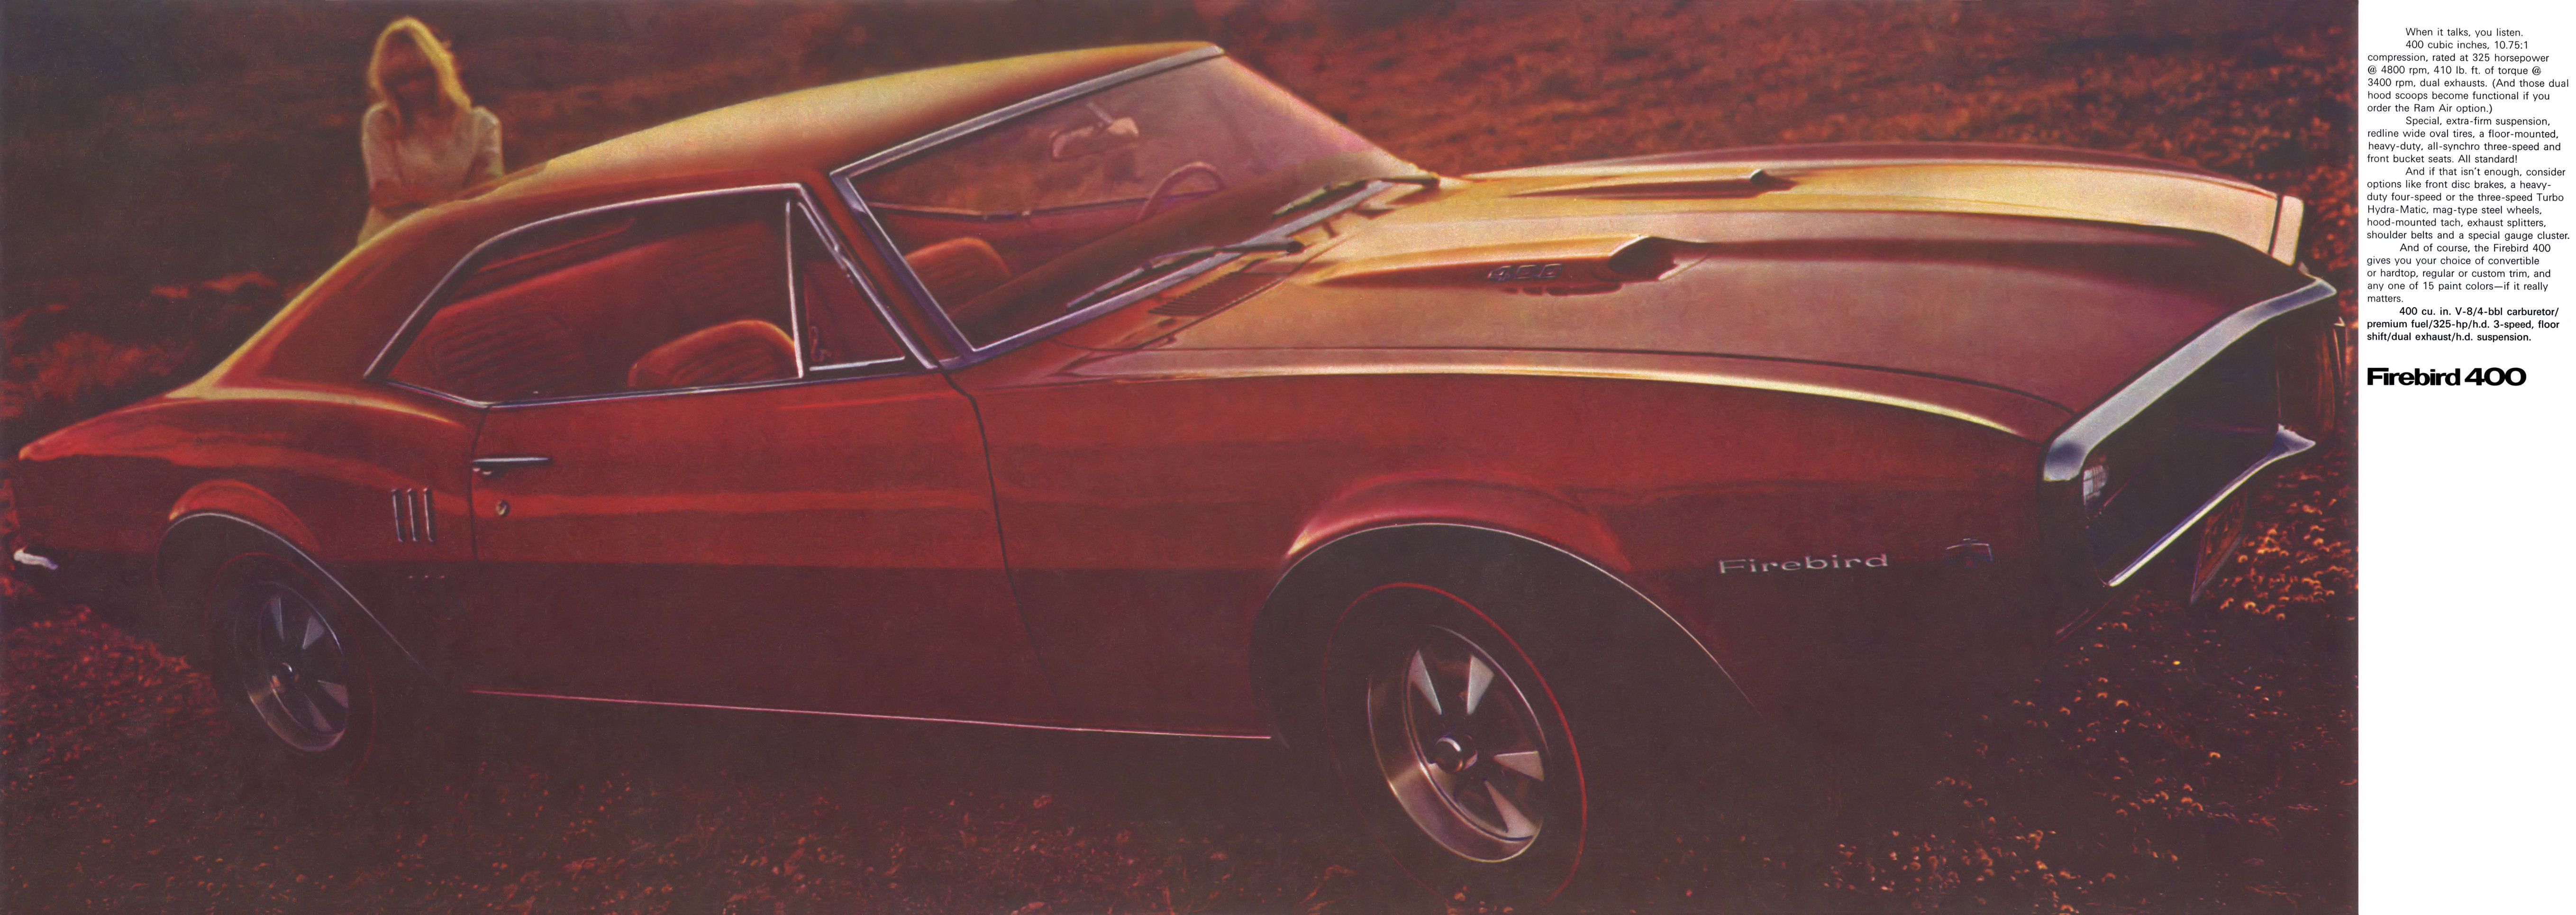 1967_Pontiac_Firebird-05-06-07-08